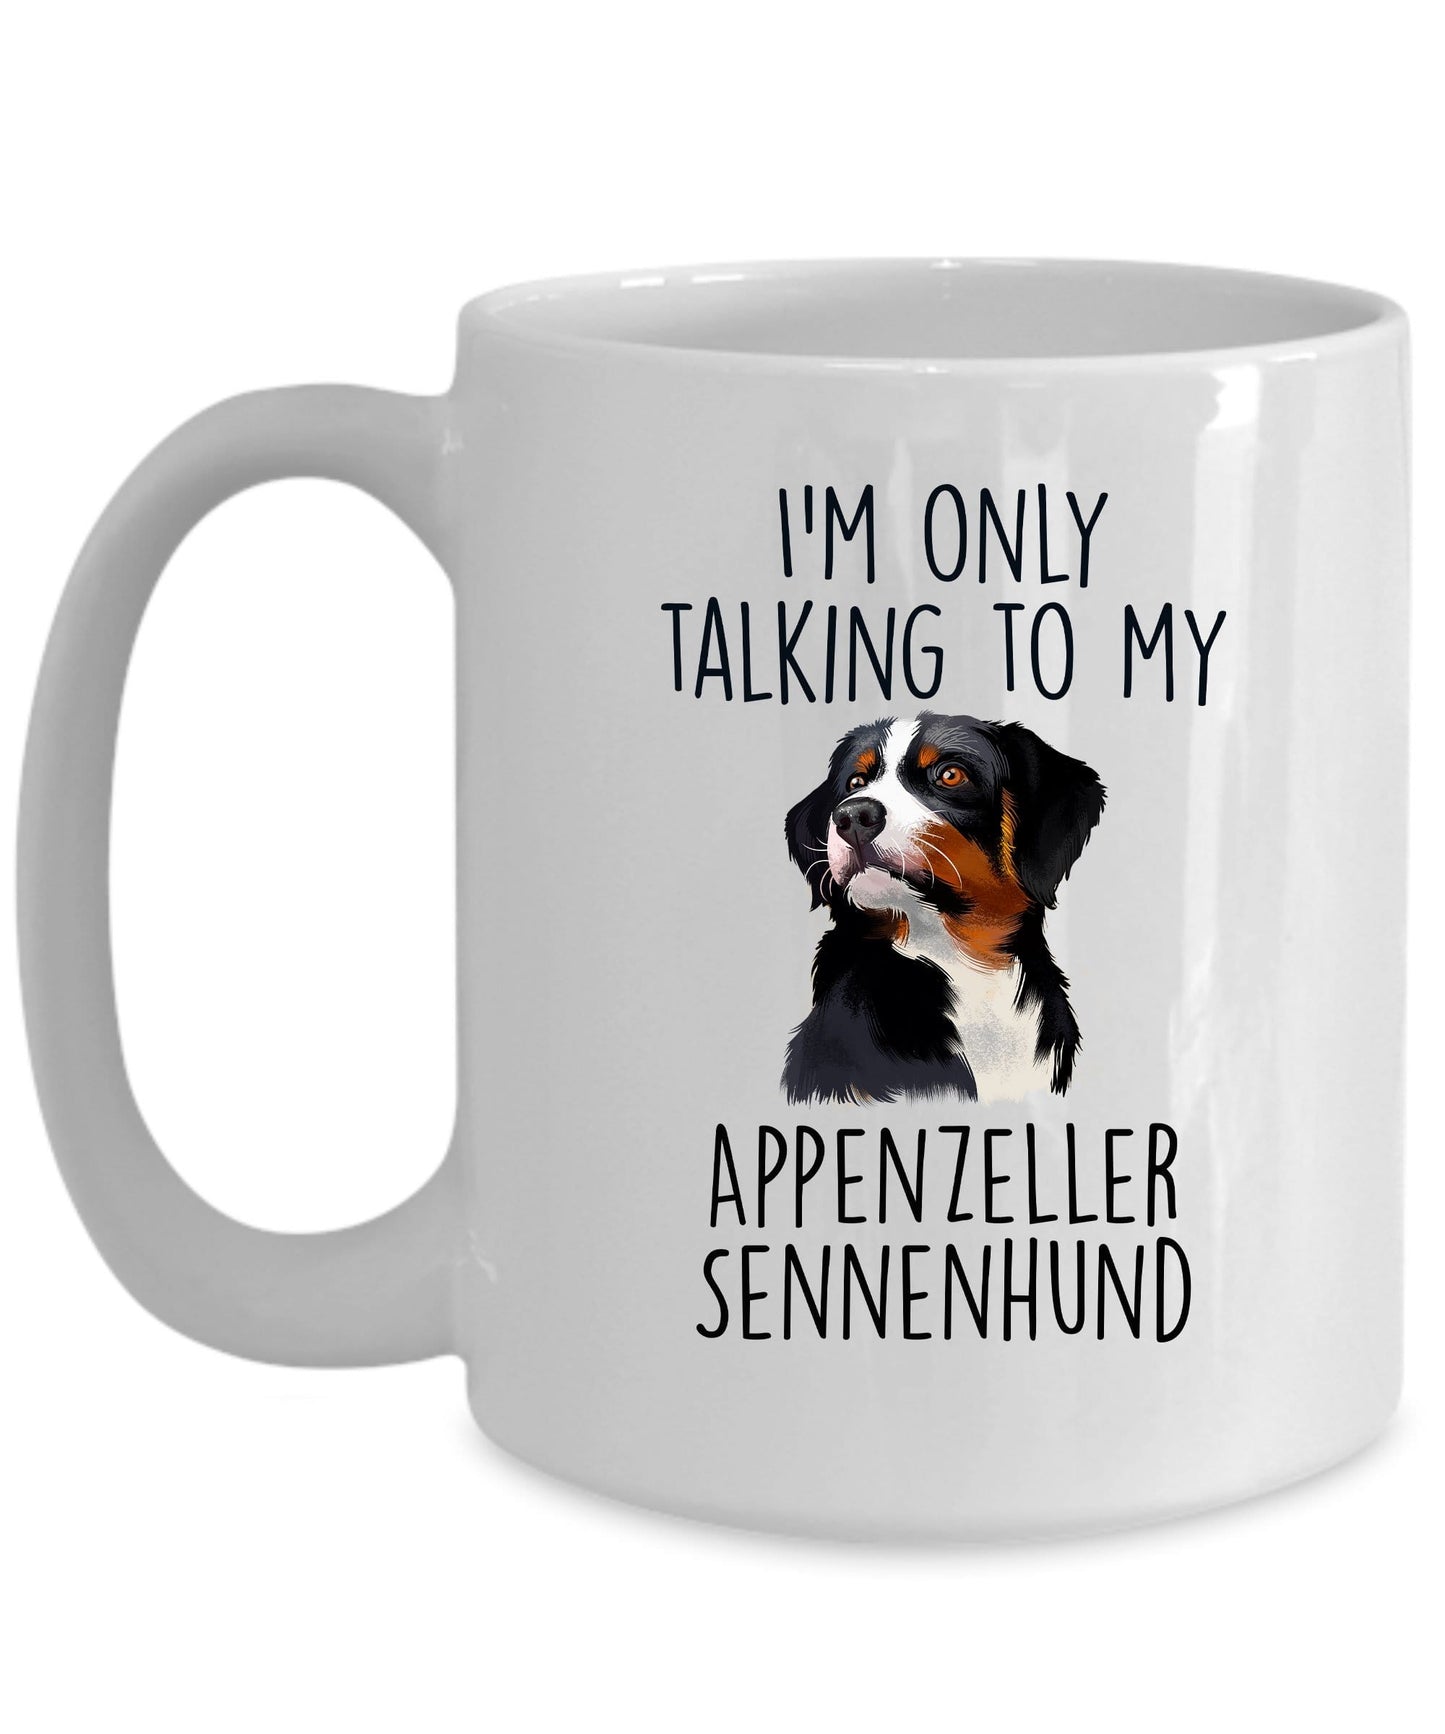 Appenzeller Sennenhund - I'm Only Talking to Funny Coffee Mug